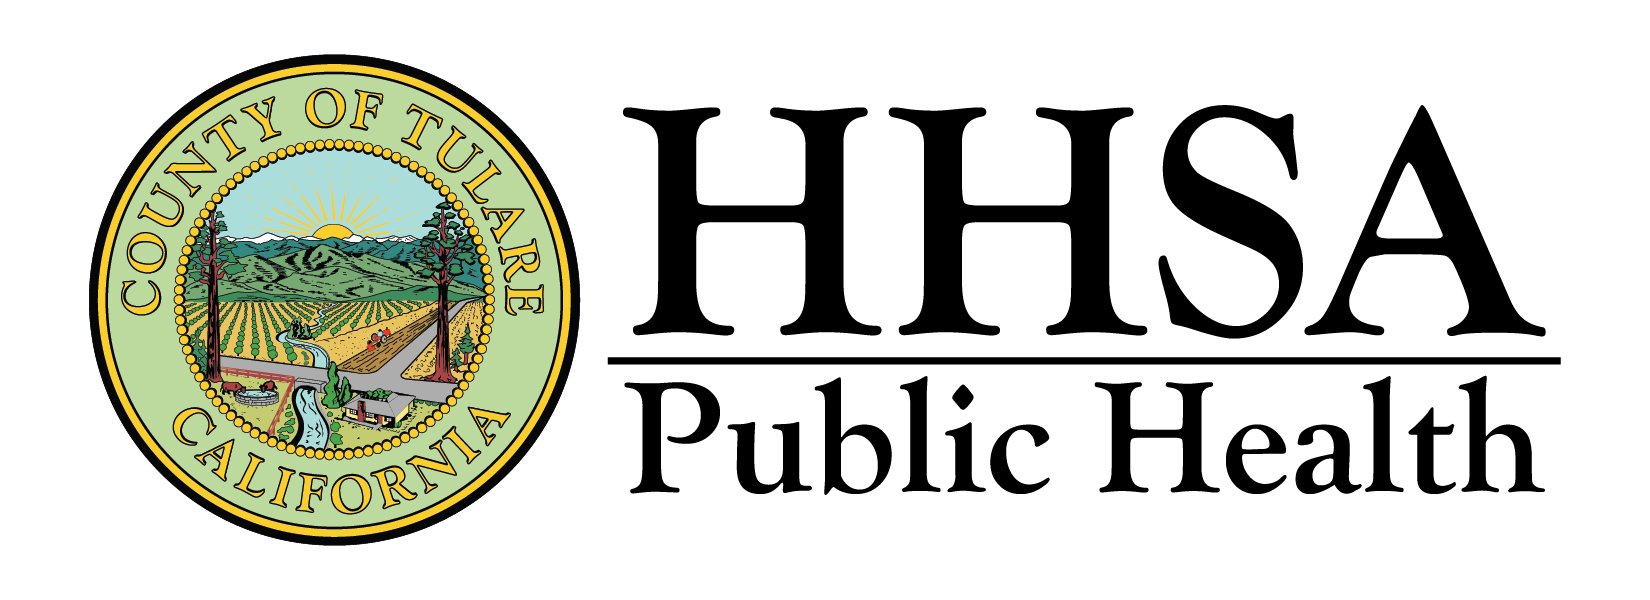 Public Health Logo Array - 9.20.17 NJW-01.jpg